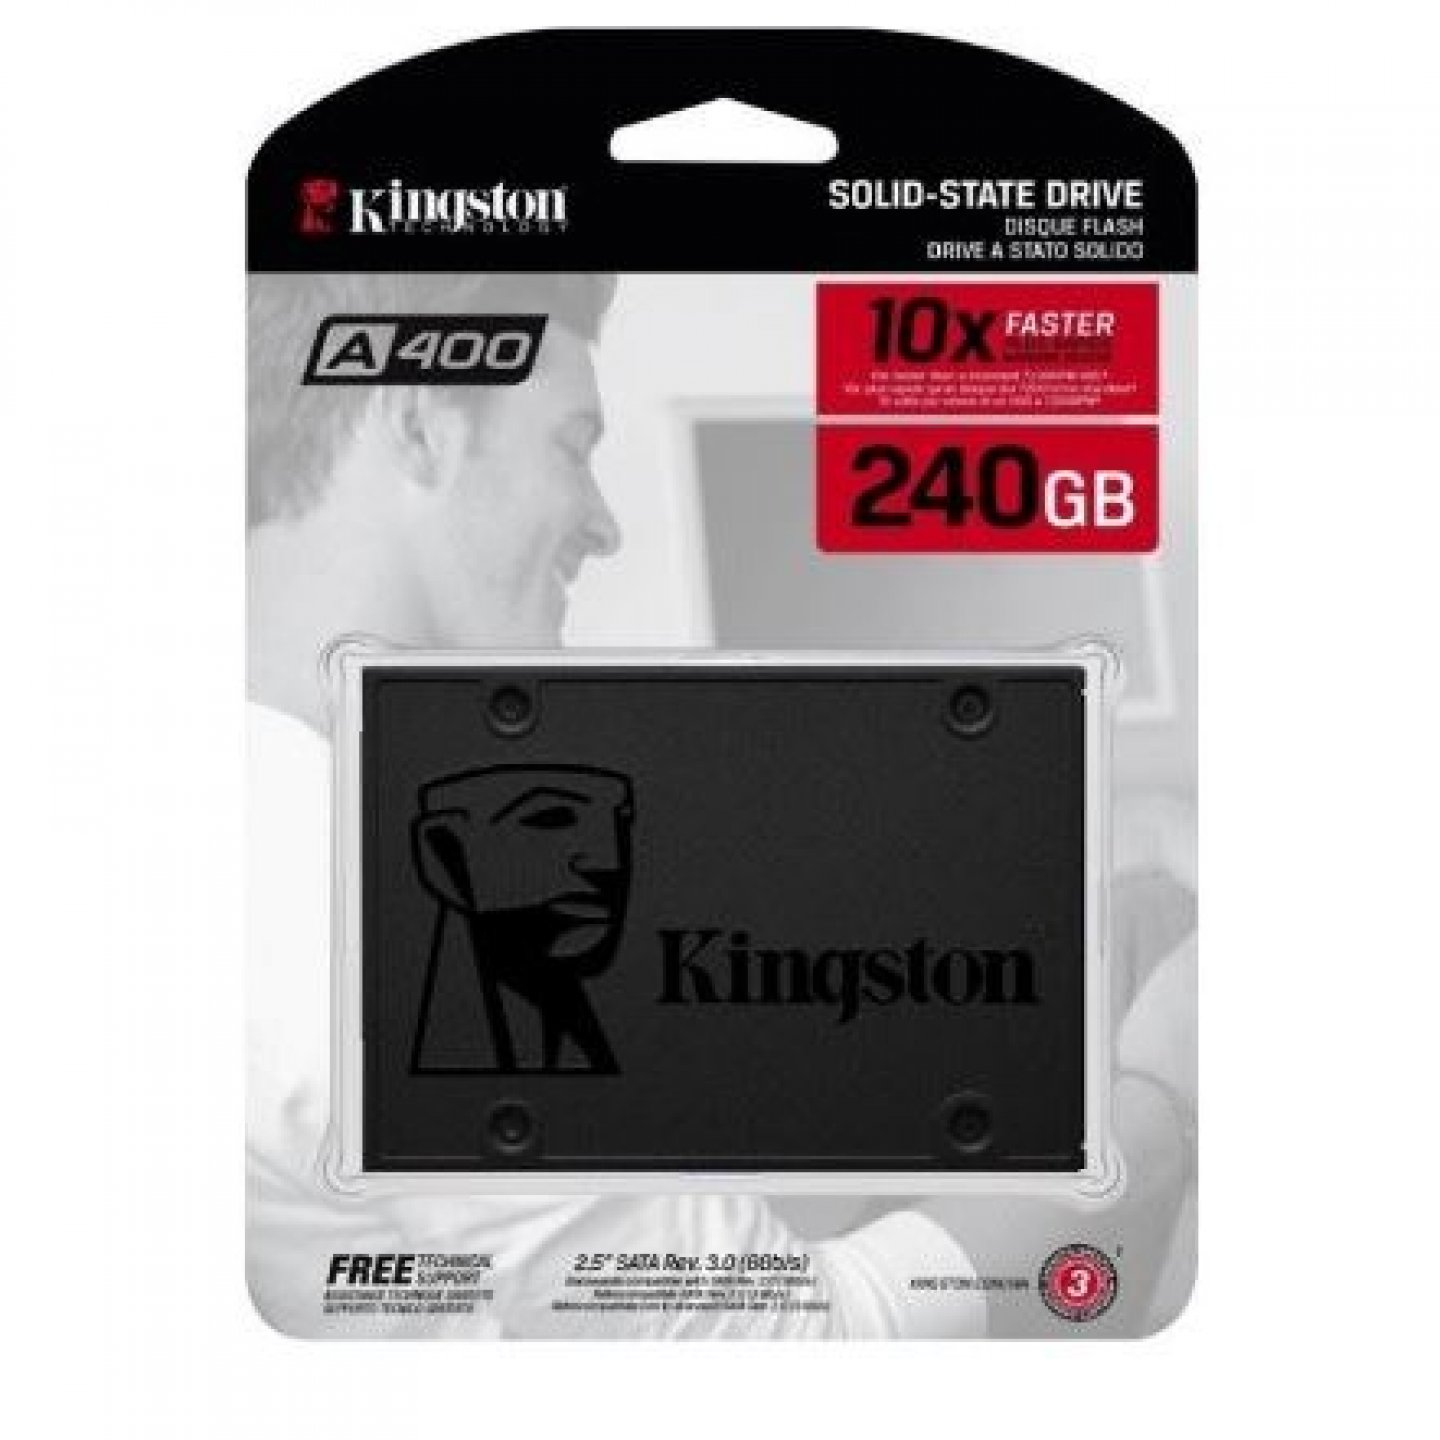 SSD KINGSTON 240GB A400 7MM SA400S37/240G